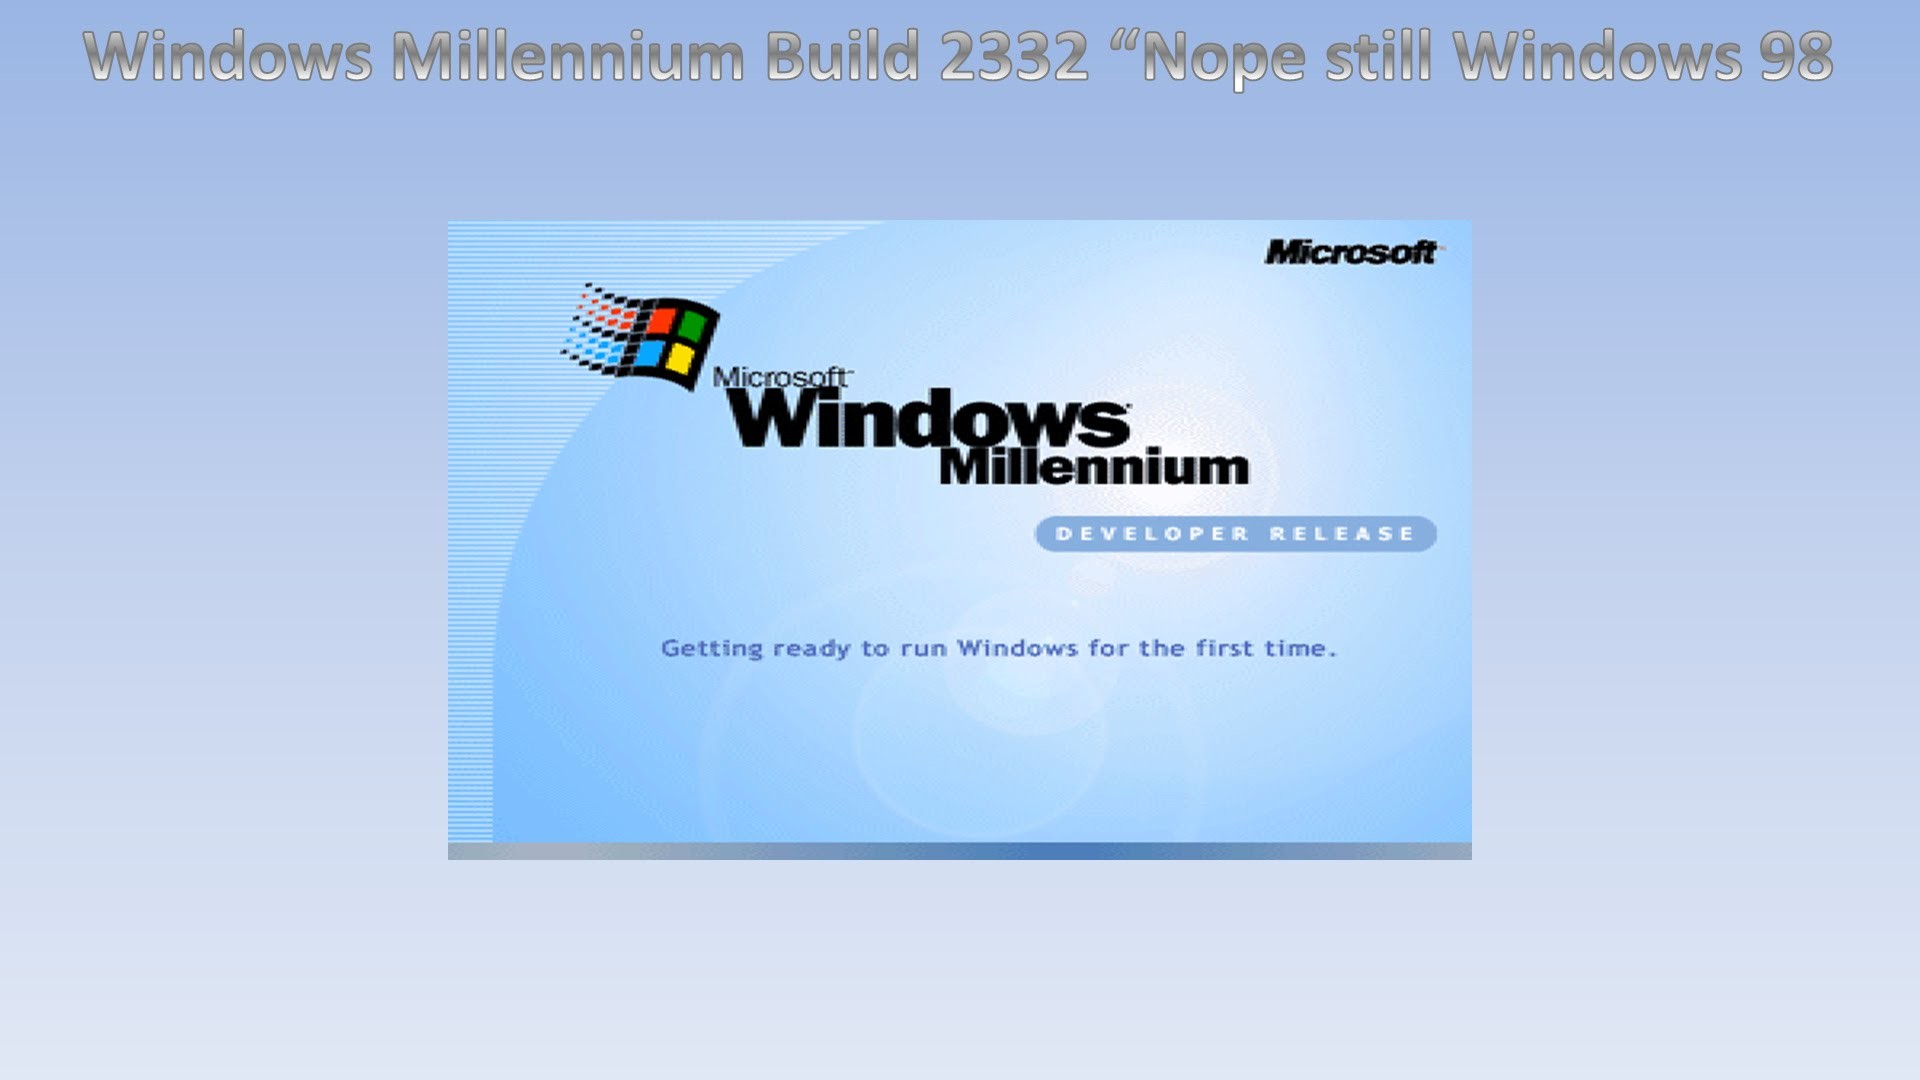 [Nostalgia.win] Windows Millennium Build 2332 "Nope still Windows 98"